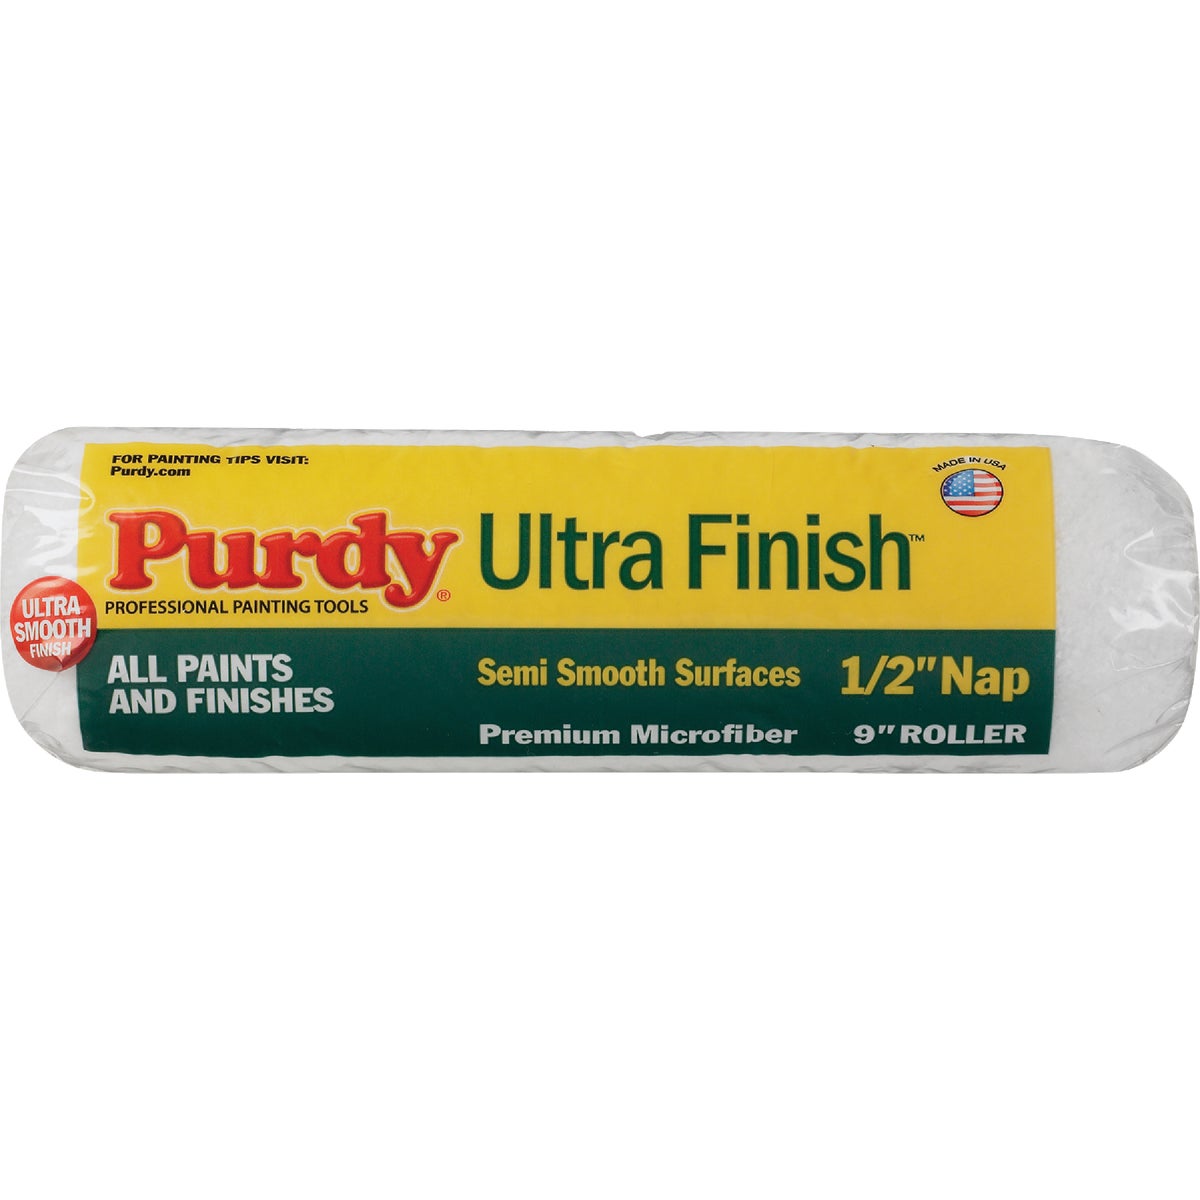 Purdy Ultra Finish 9 In. x 1/2 In. Microfiber Roller Cover